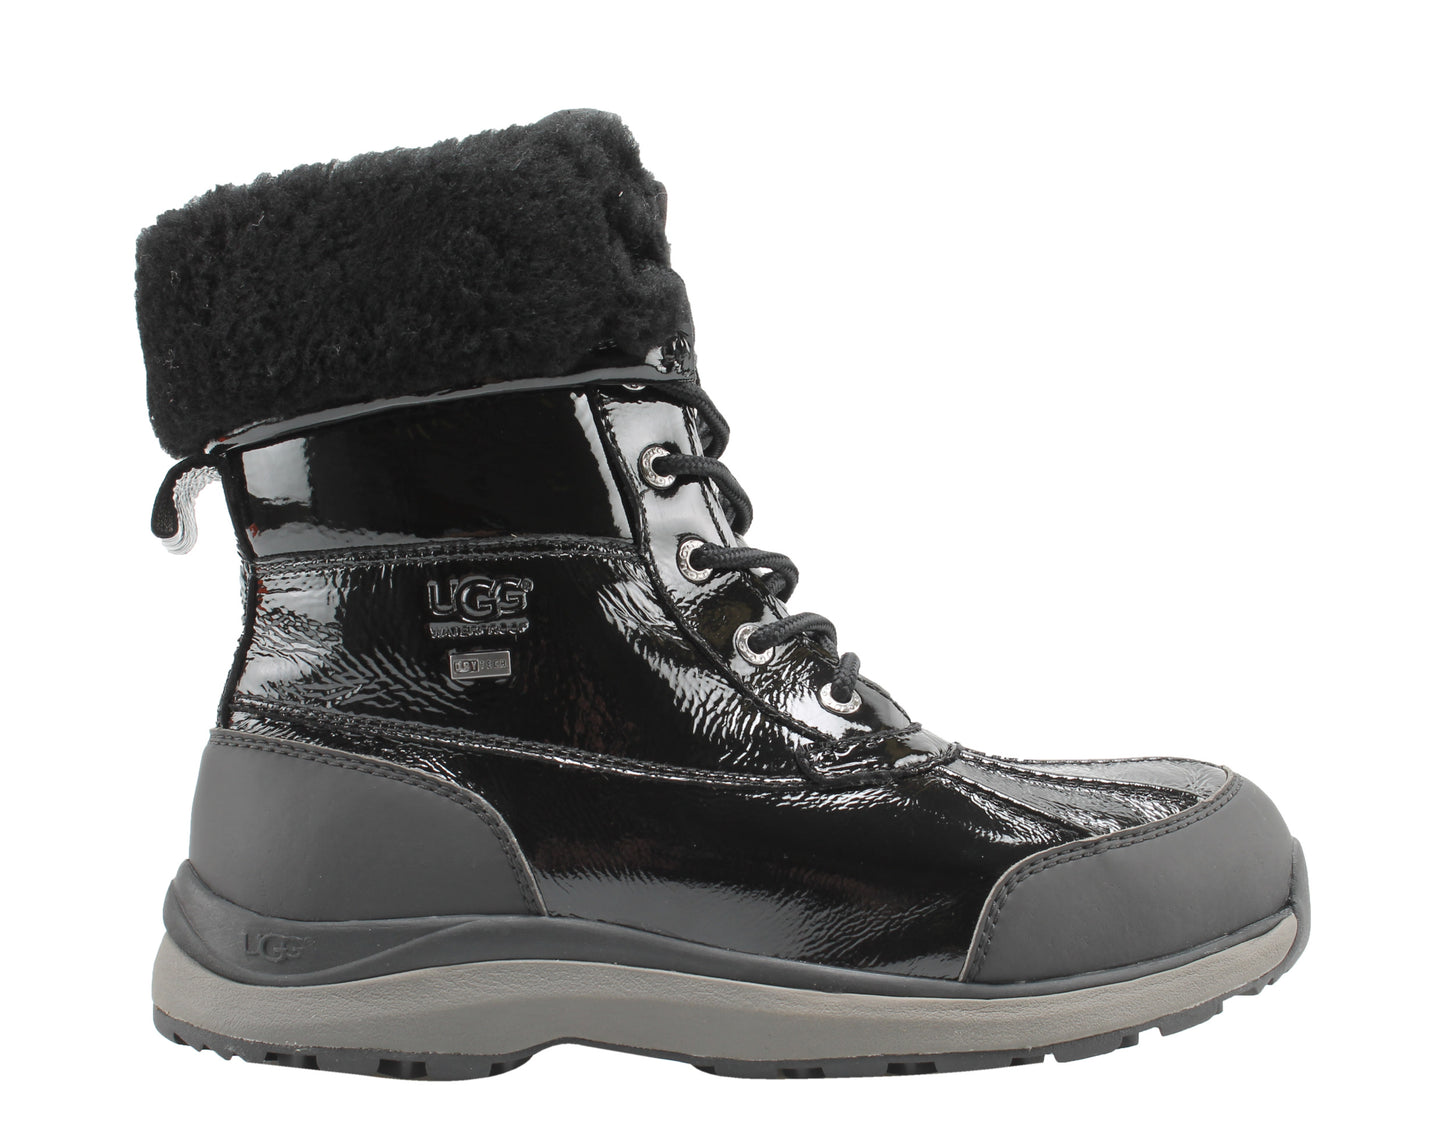 UGG Australia Adirondack III Patent Women's Boots